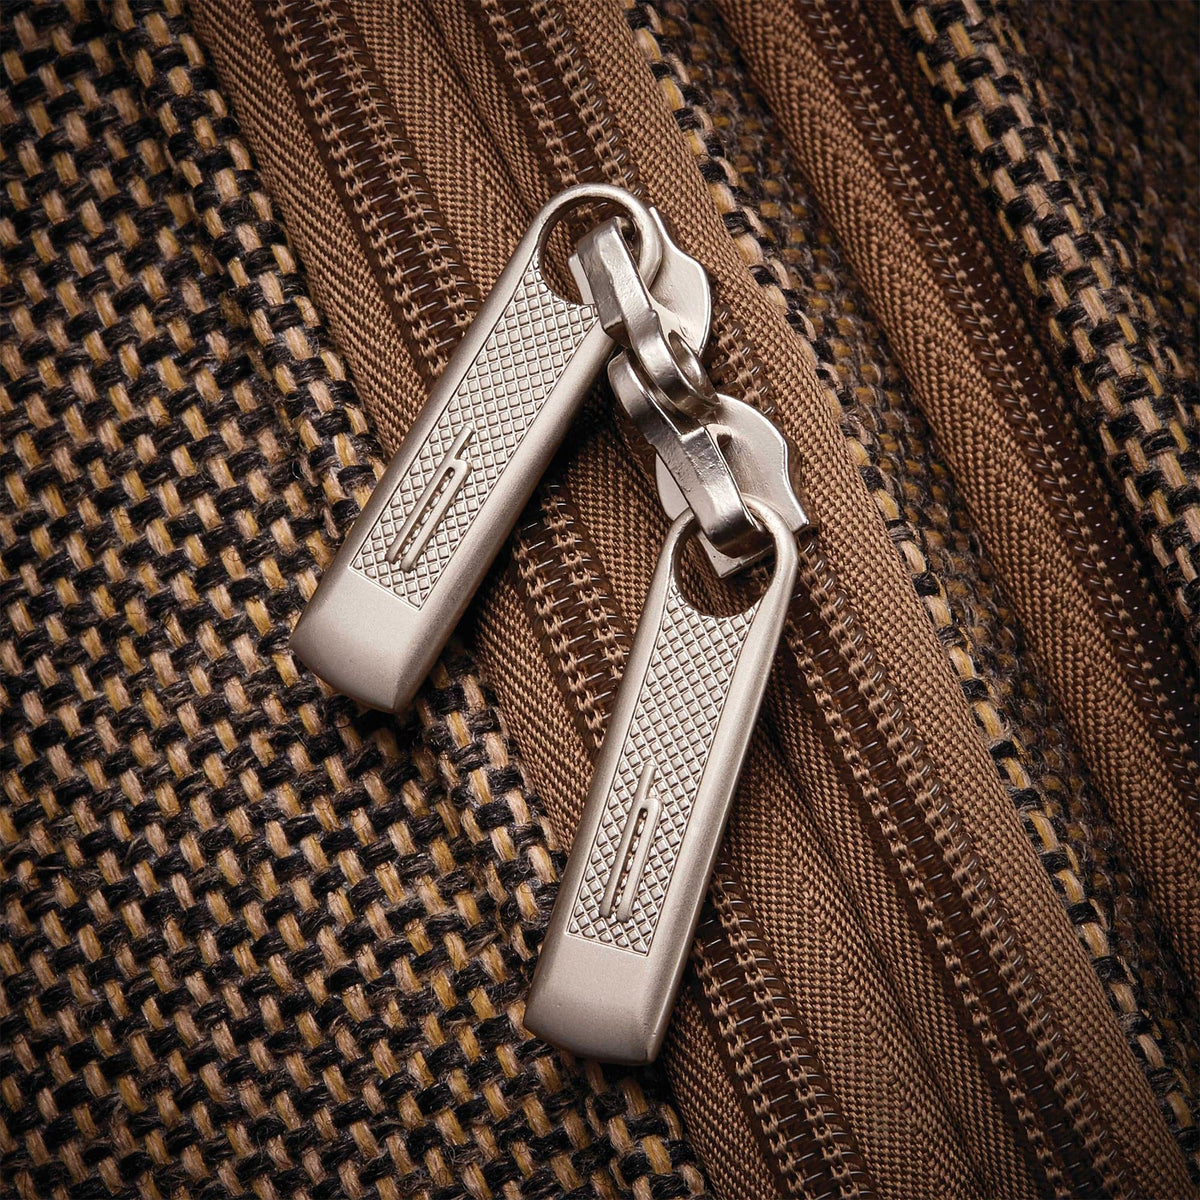 Hartmann Tweed Legend Softside Medium Journey Expandable Spinner Luggage